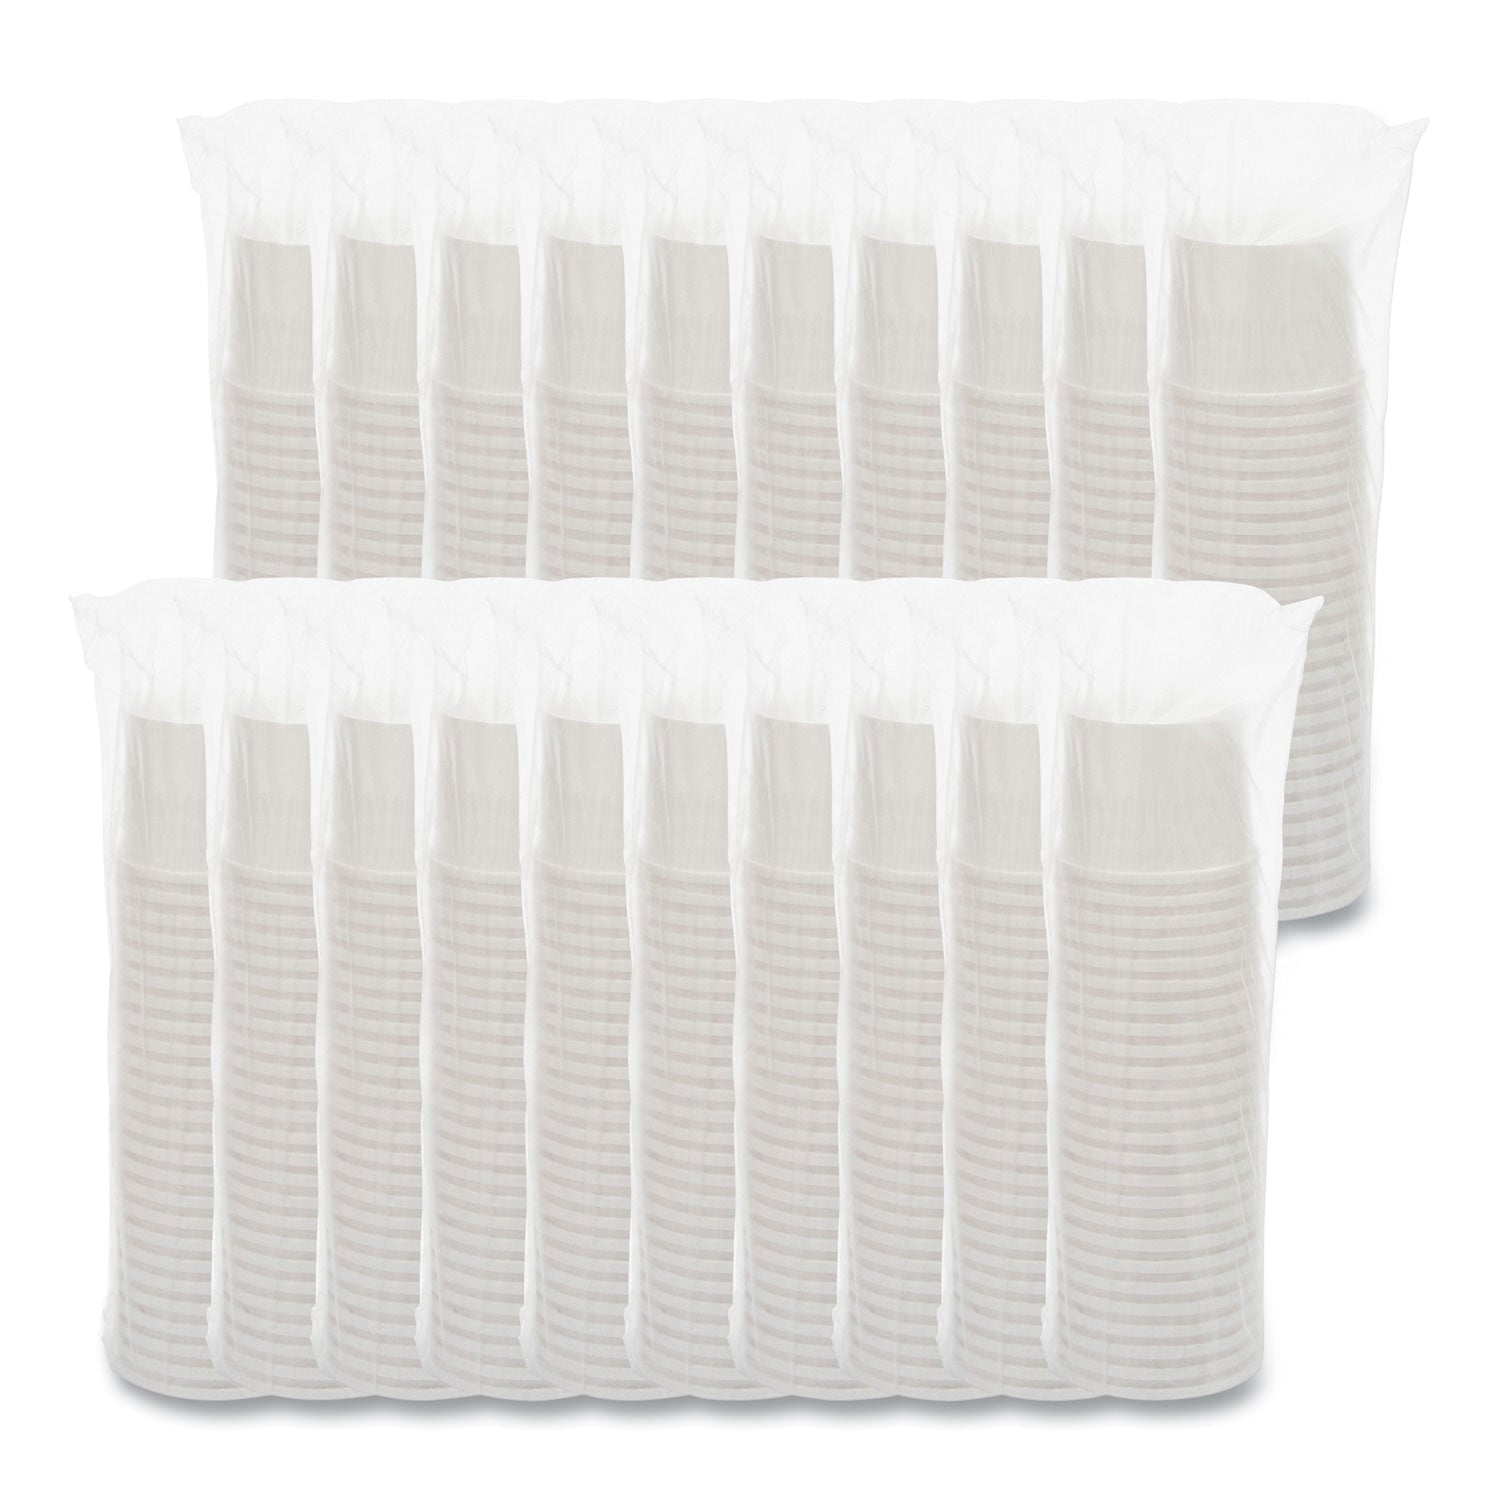 flexstyle-double-poly-paper-containers-12-oz-36-diameter-white-paper-25-bag-20-bags-carton_scchs4125wh - 6